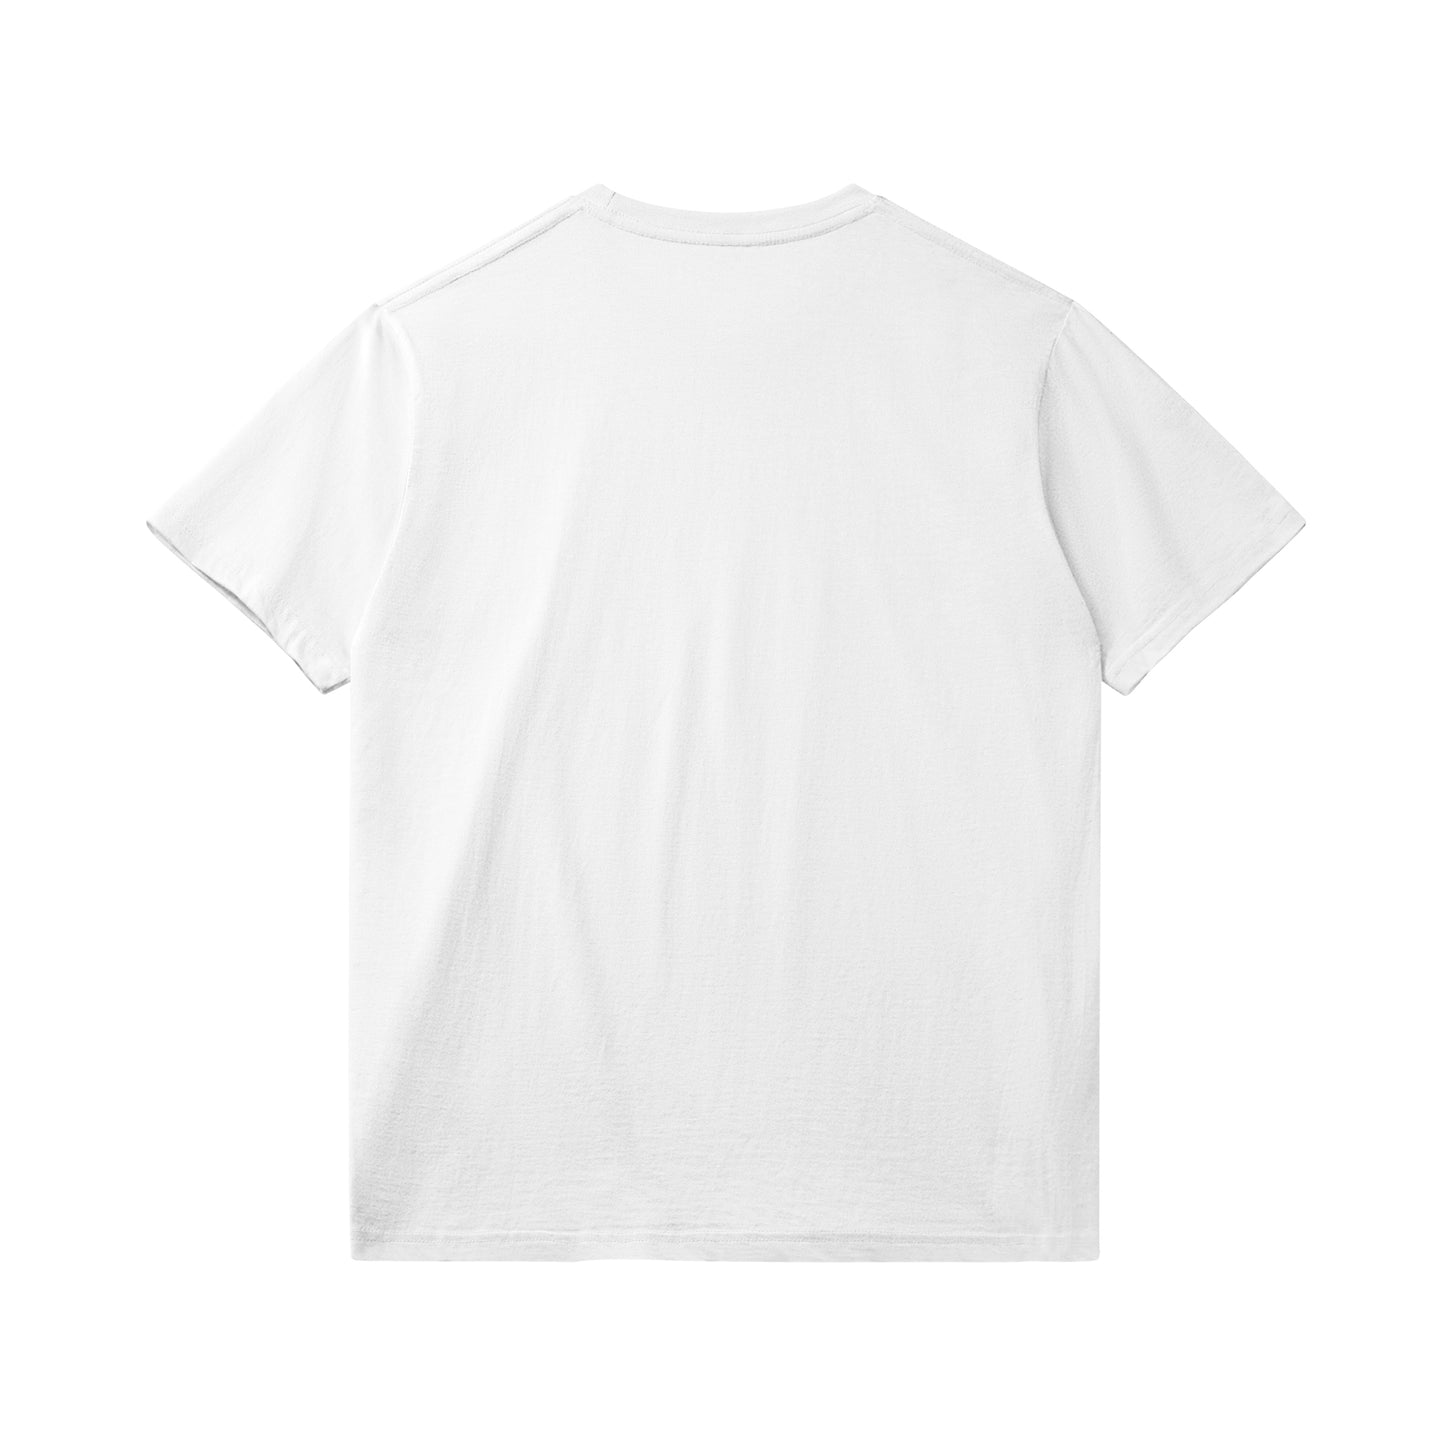 PSY EYE (BACK PRINT) -  Unisex Lightweight Classic T-shirt